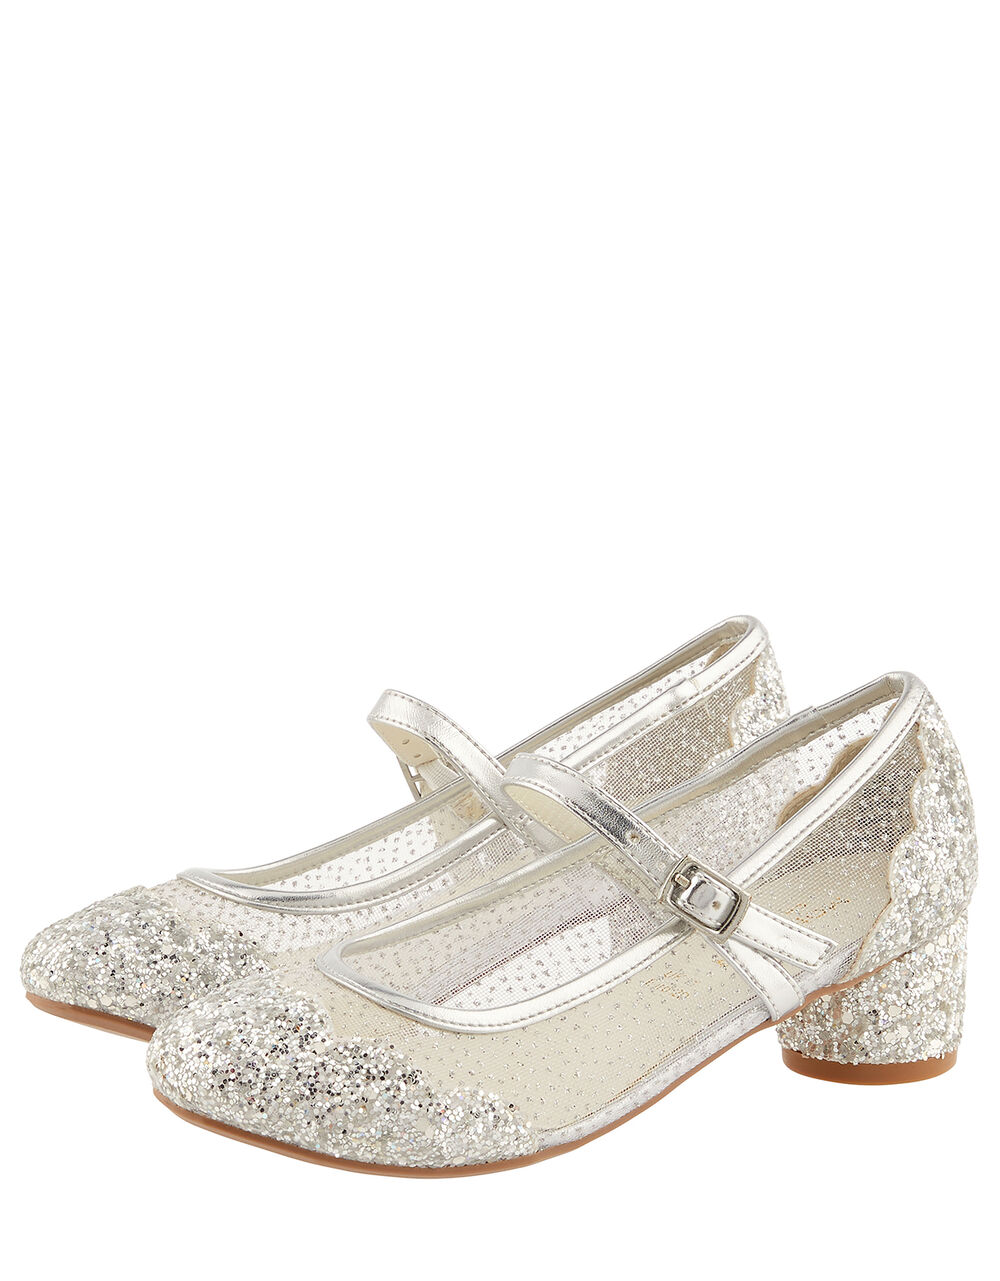 Children Children's Shoes & Sandals | Anabelle Scallop Glitter Princess Shoes Silver - RG87182